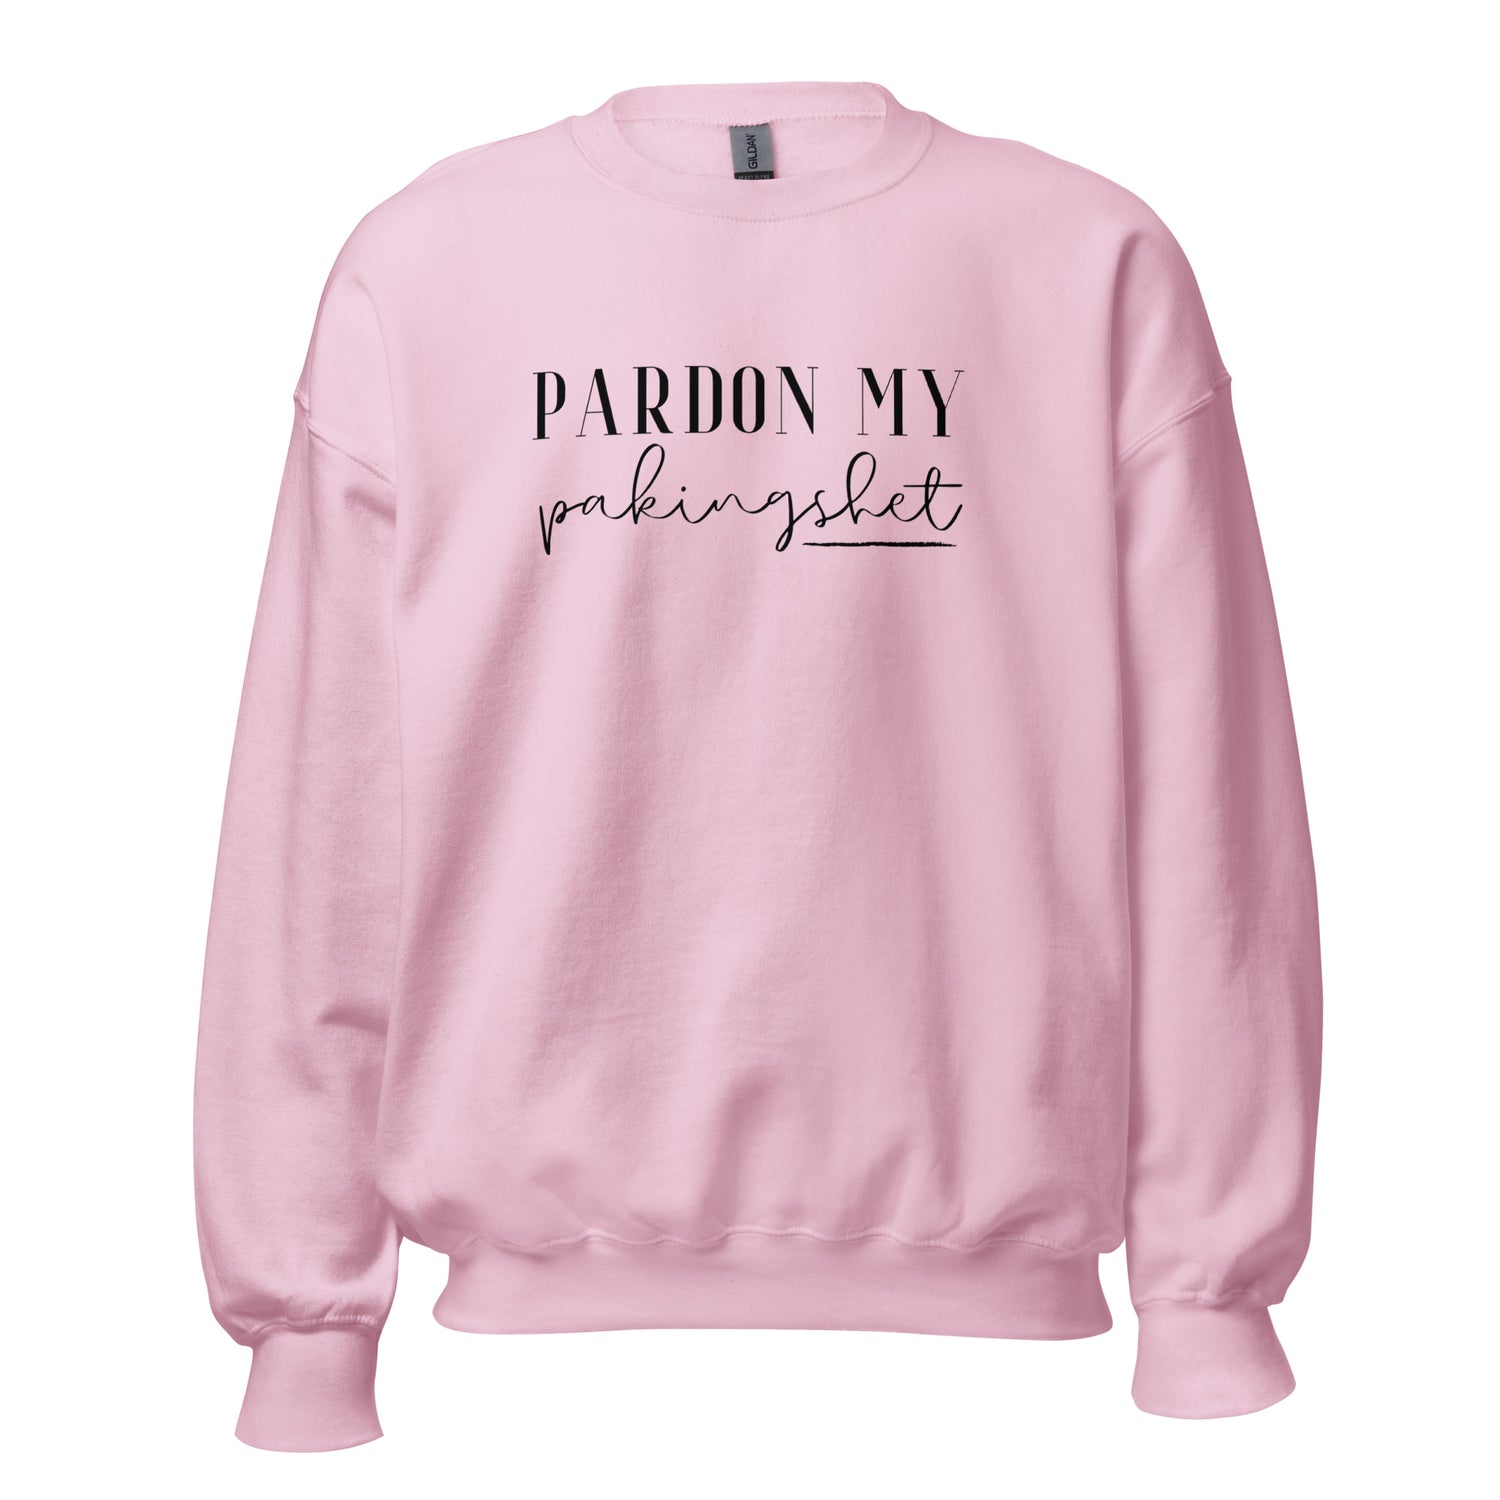 Filipino Sweatshirt Crew Neck Pardon My Pakingshet Funny Merch in color variant Light Pink